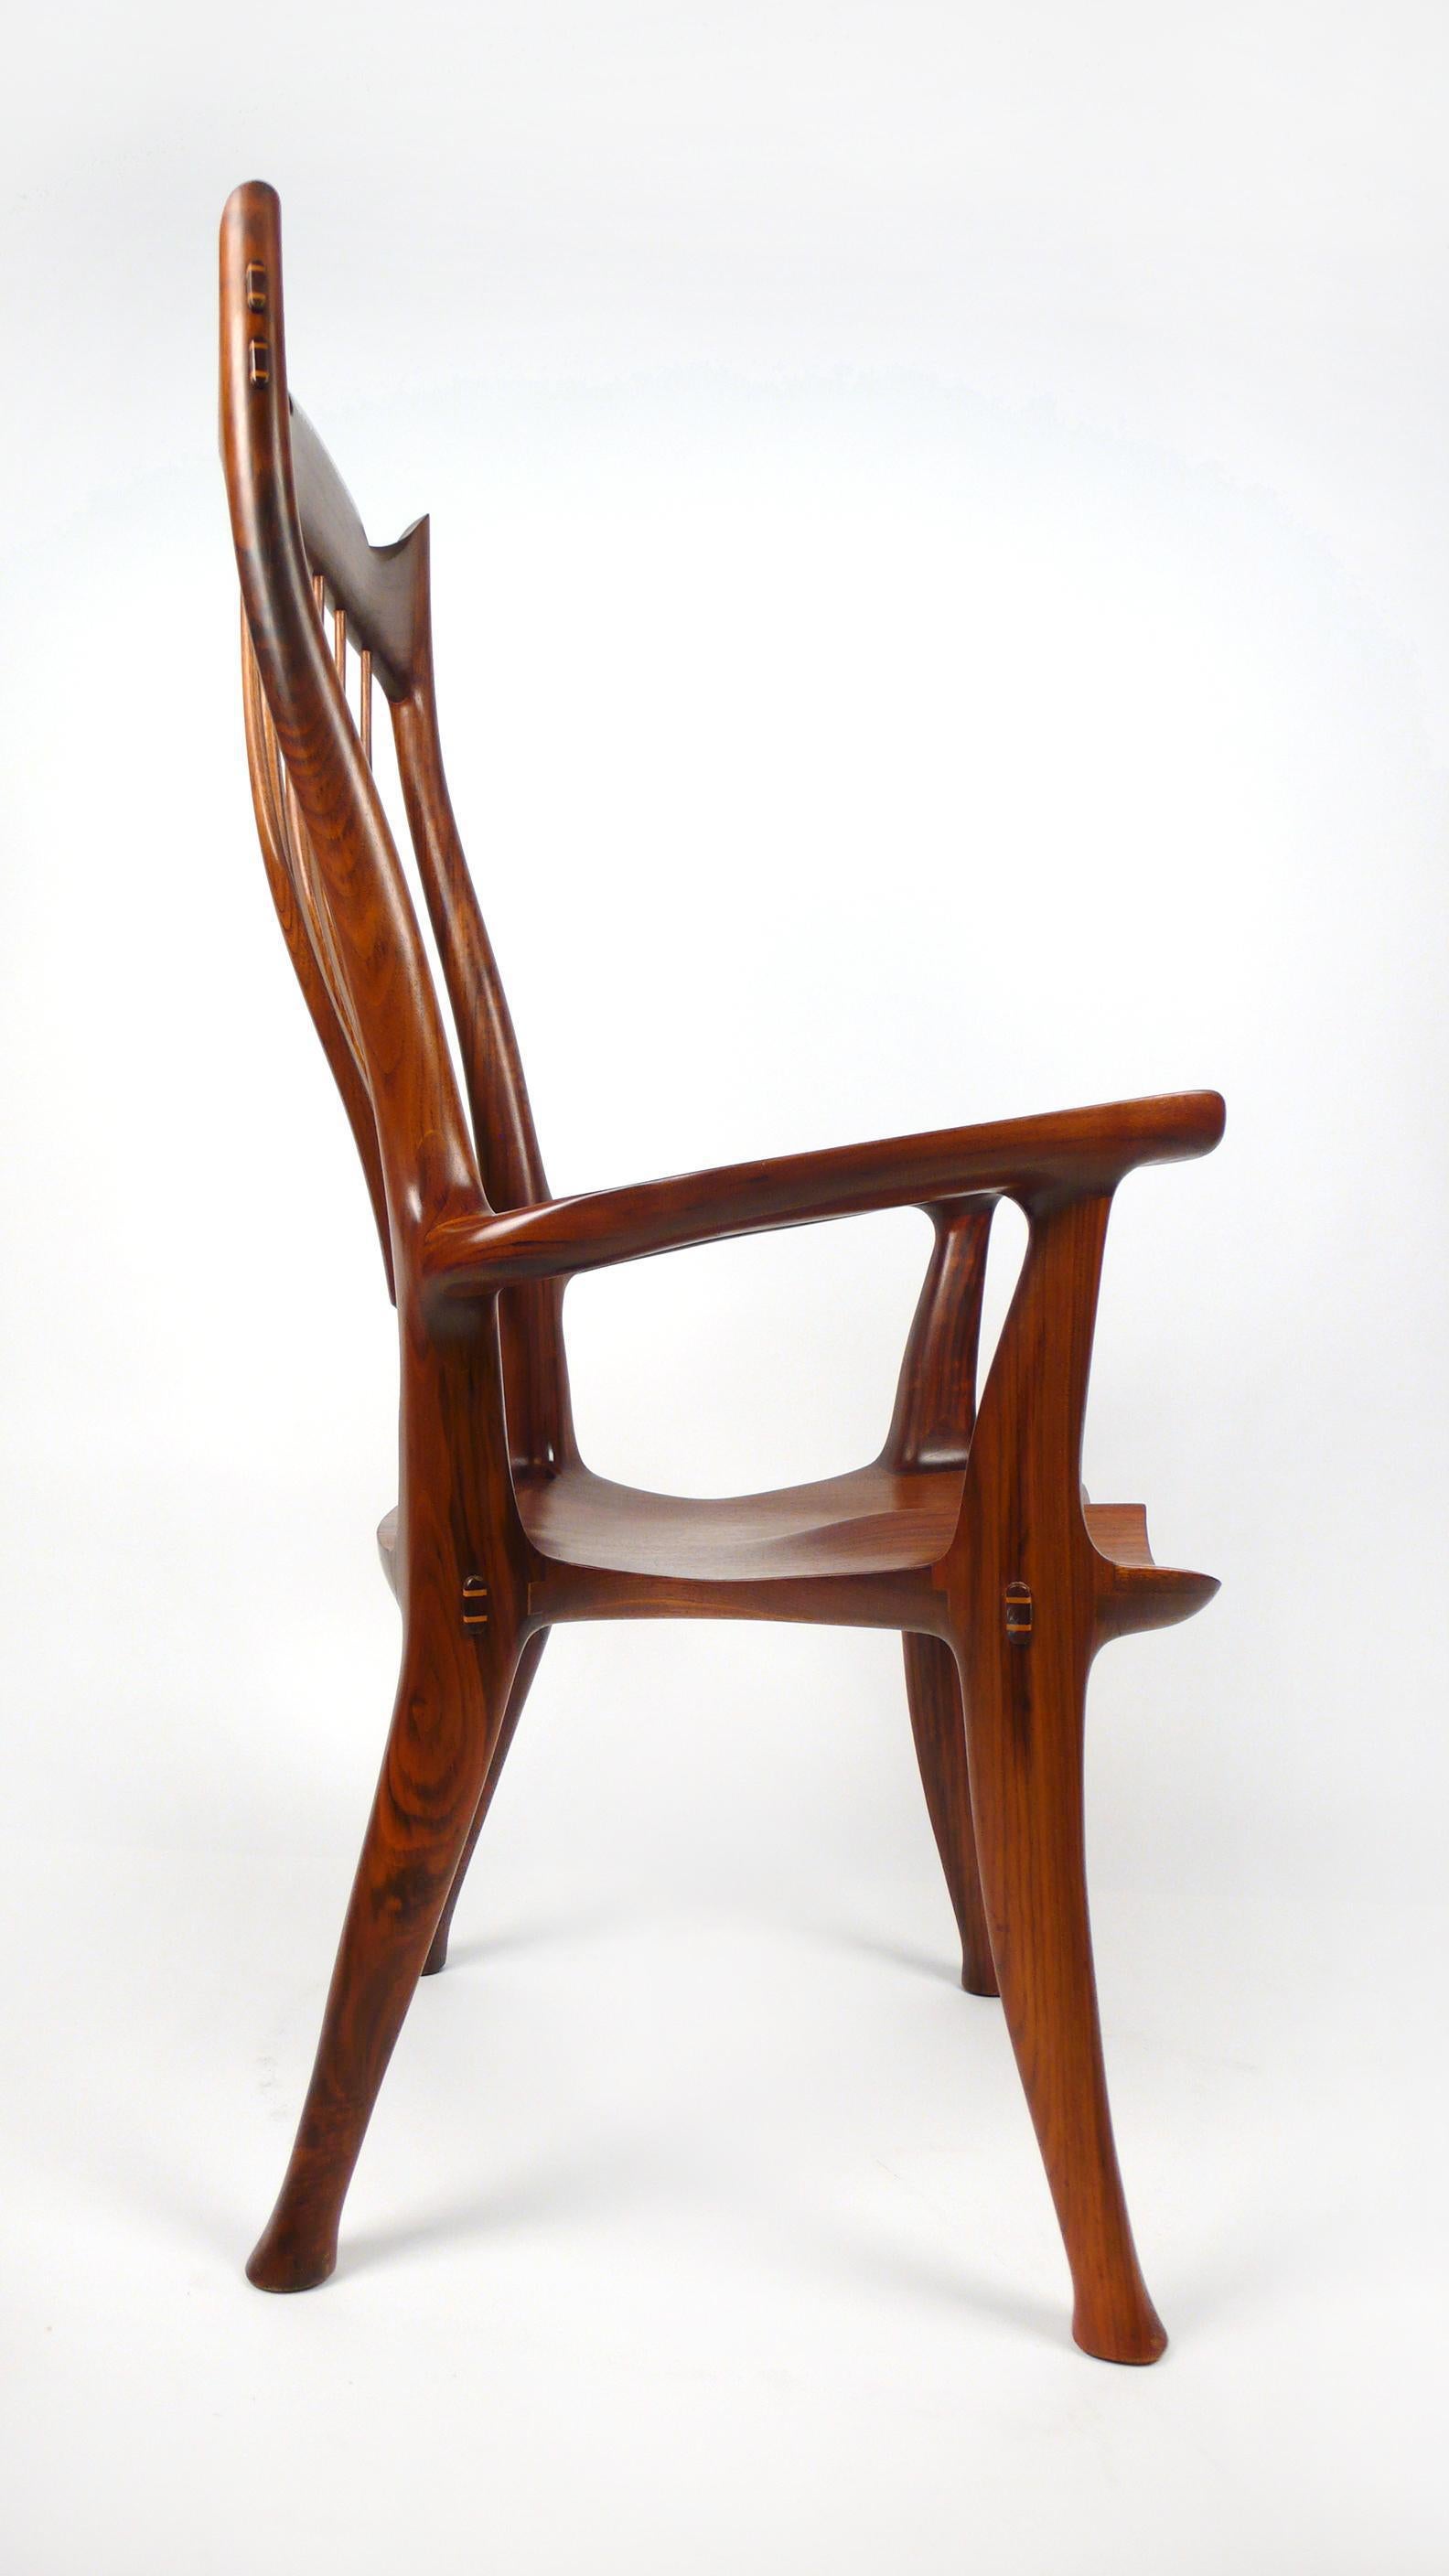 maloof chair